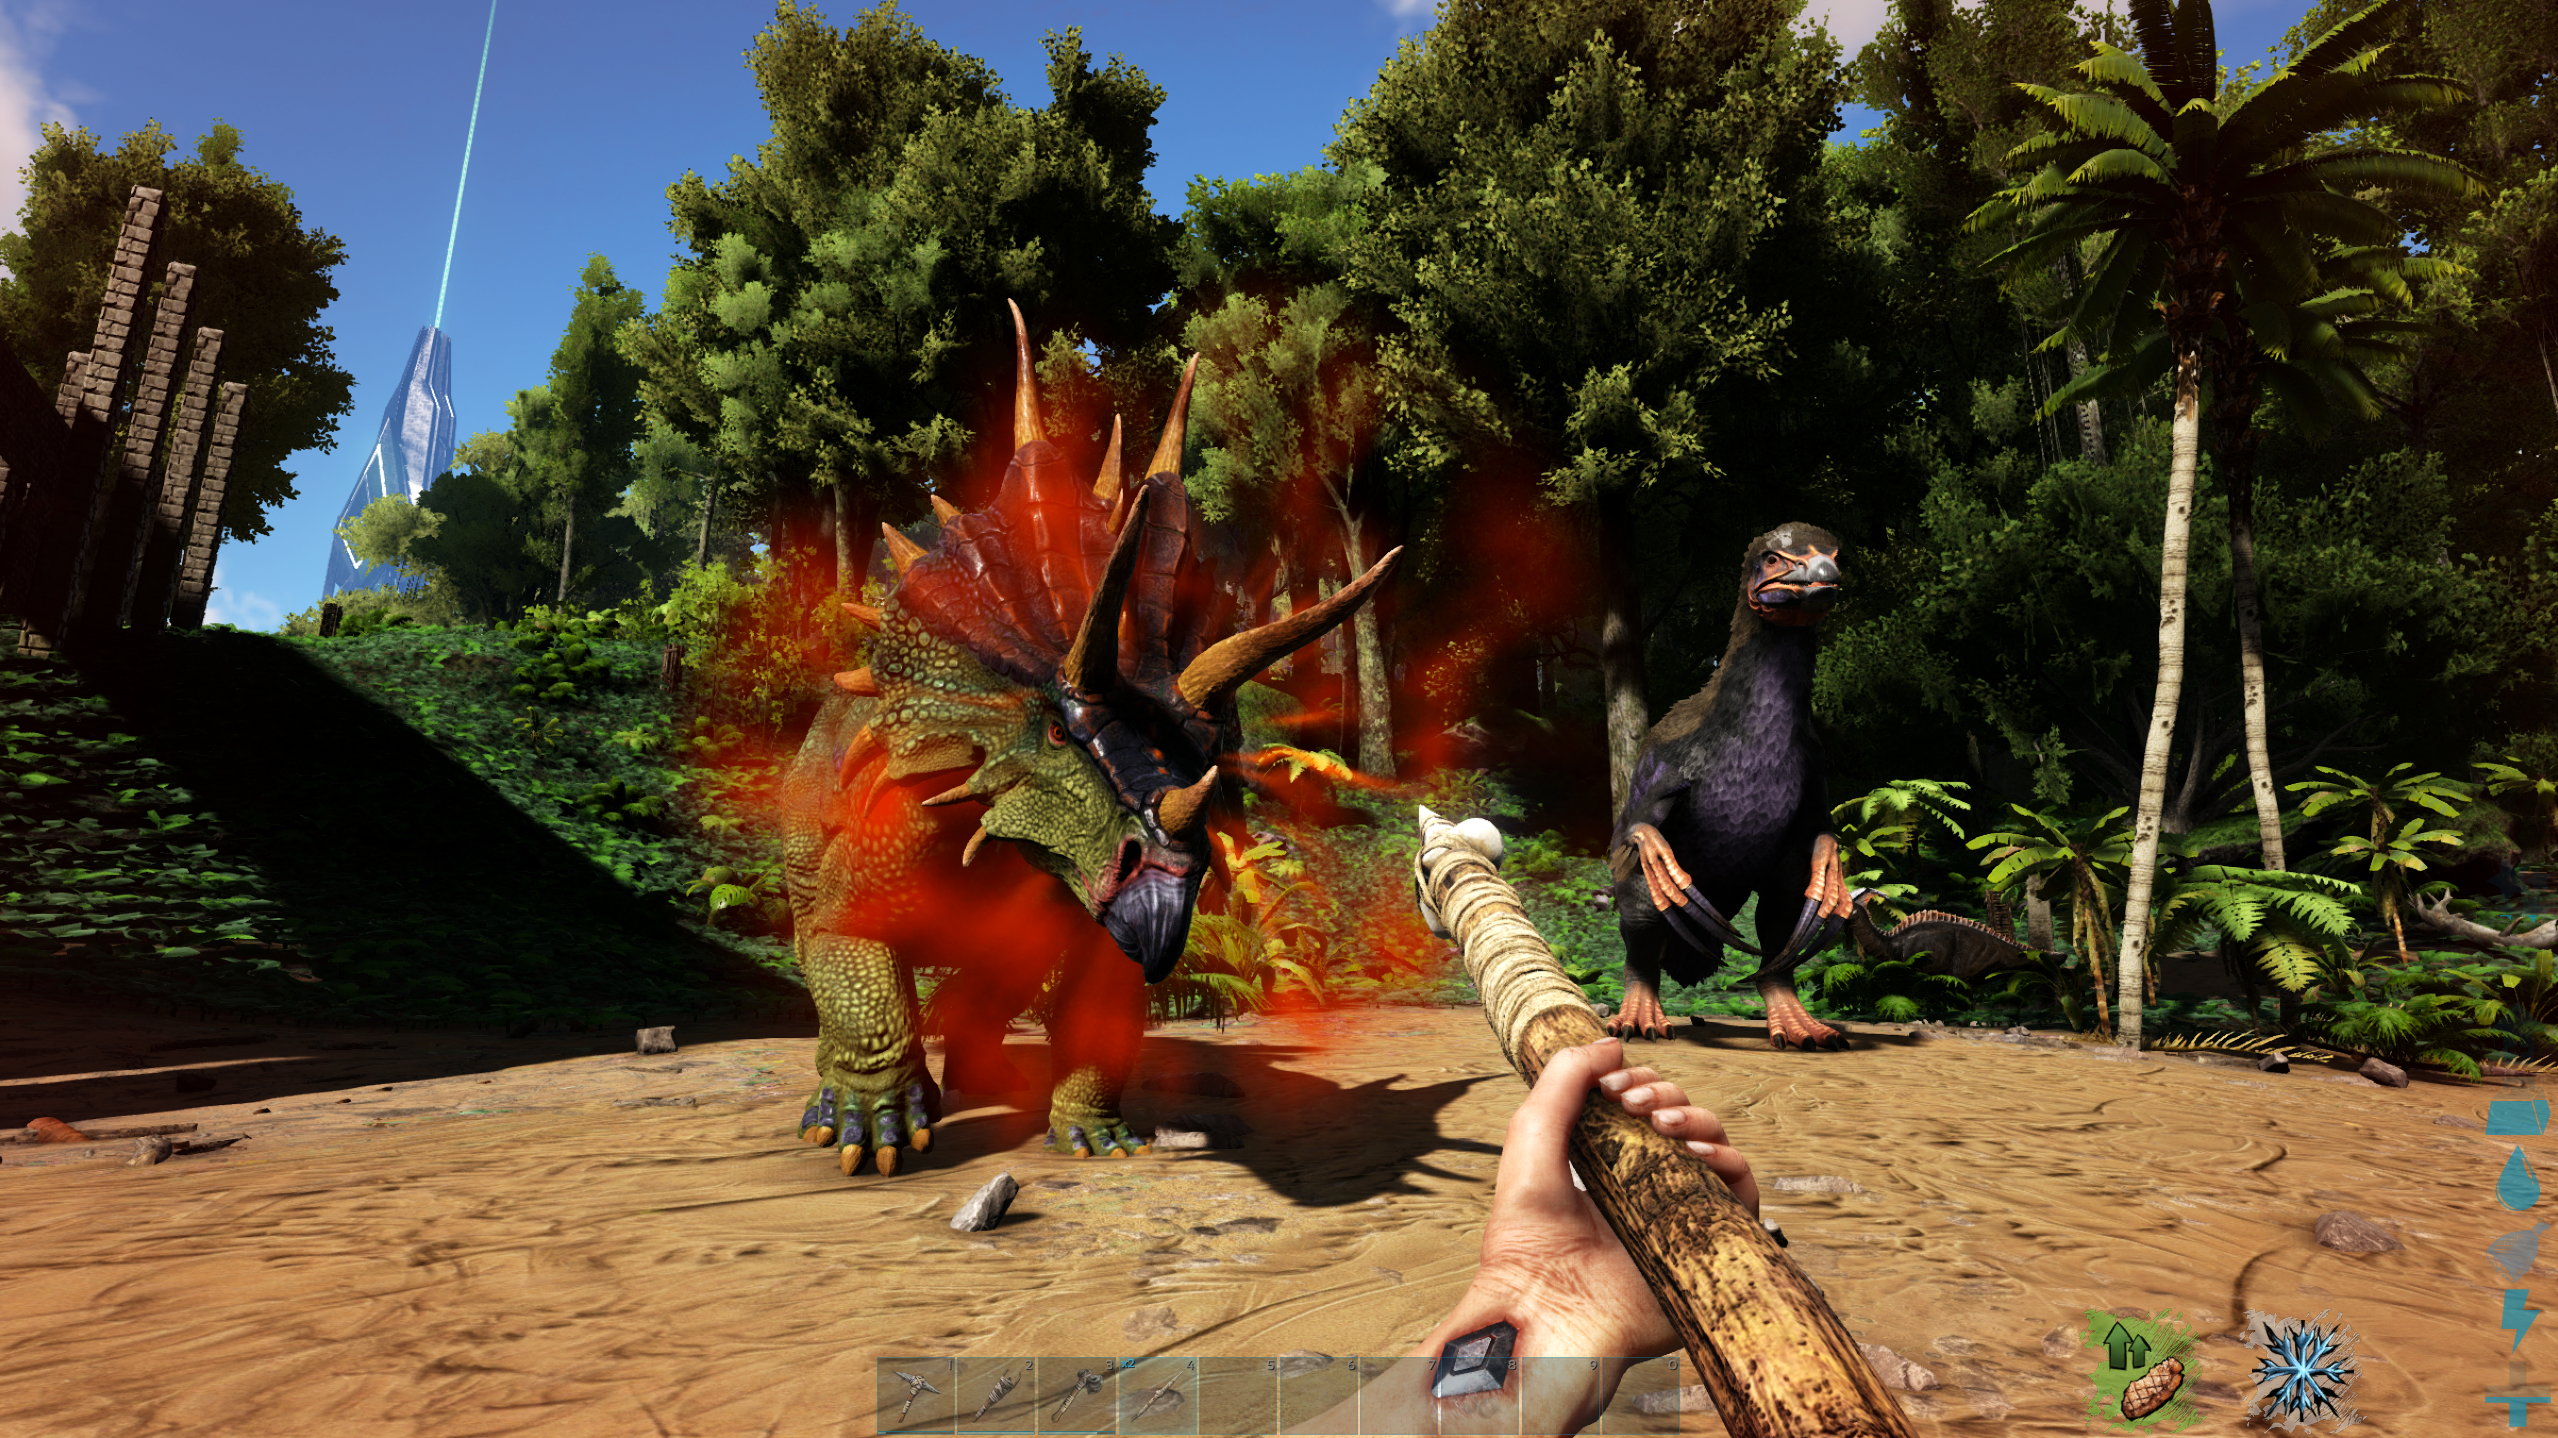 ark survival evolved car games download free for pc full version